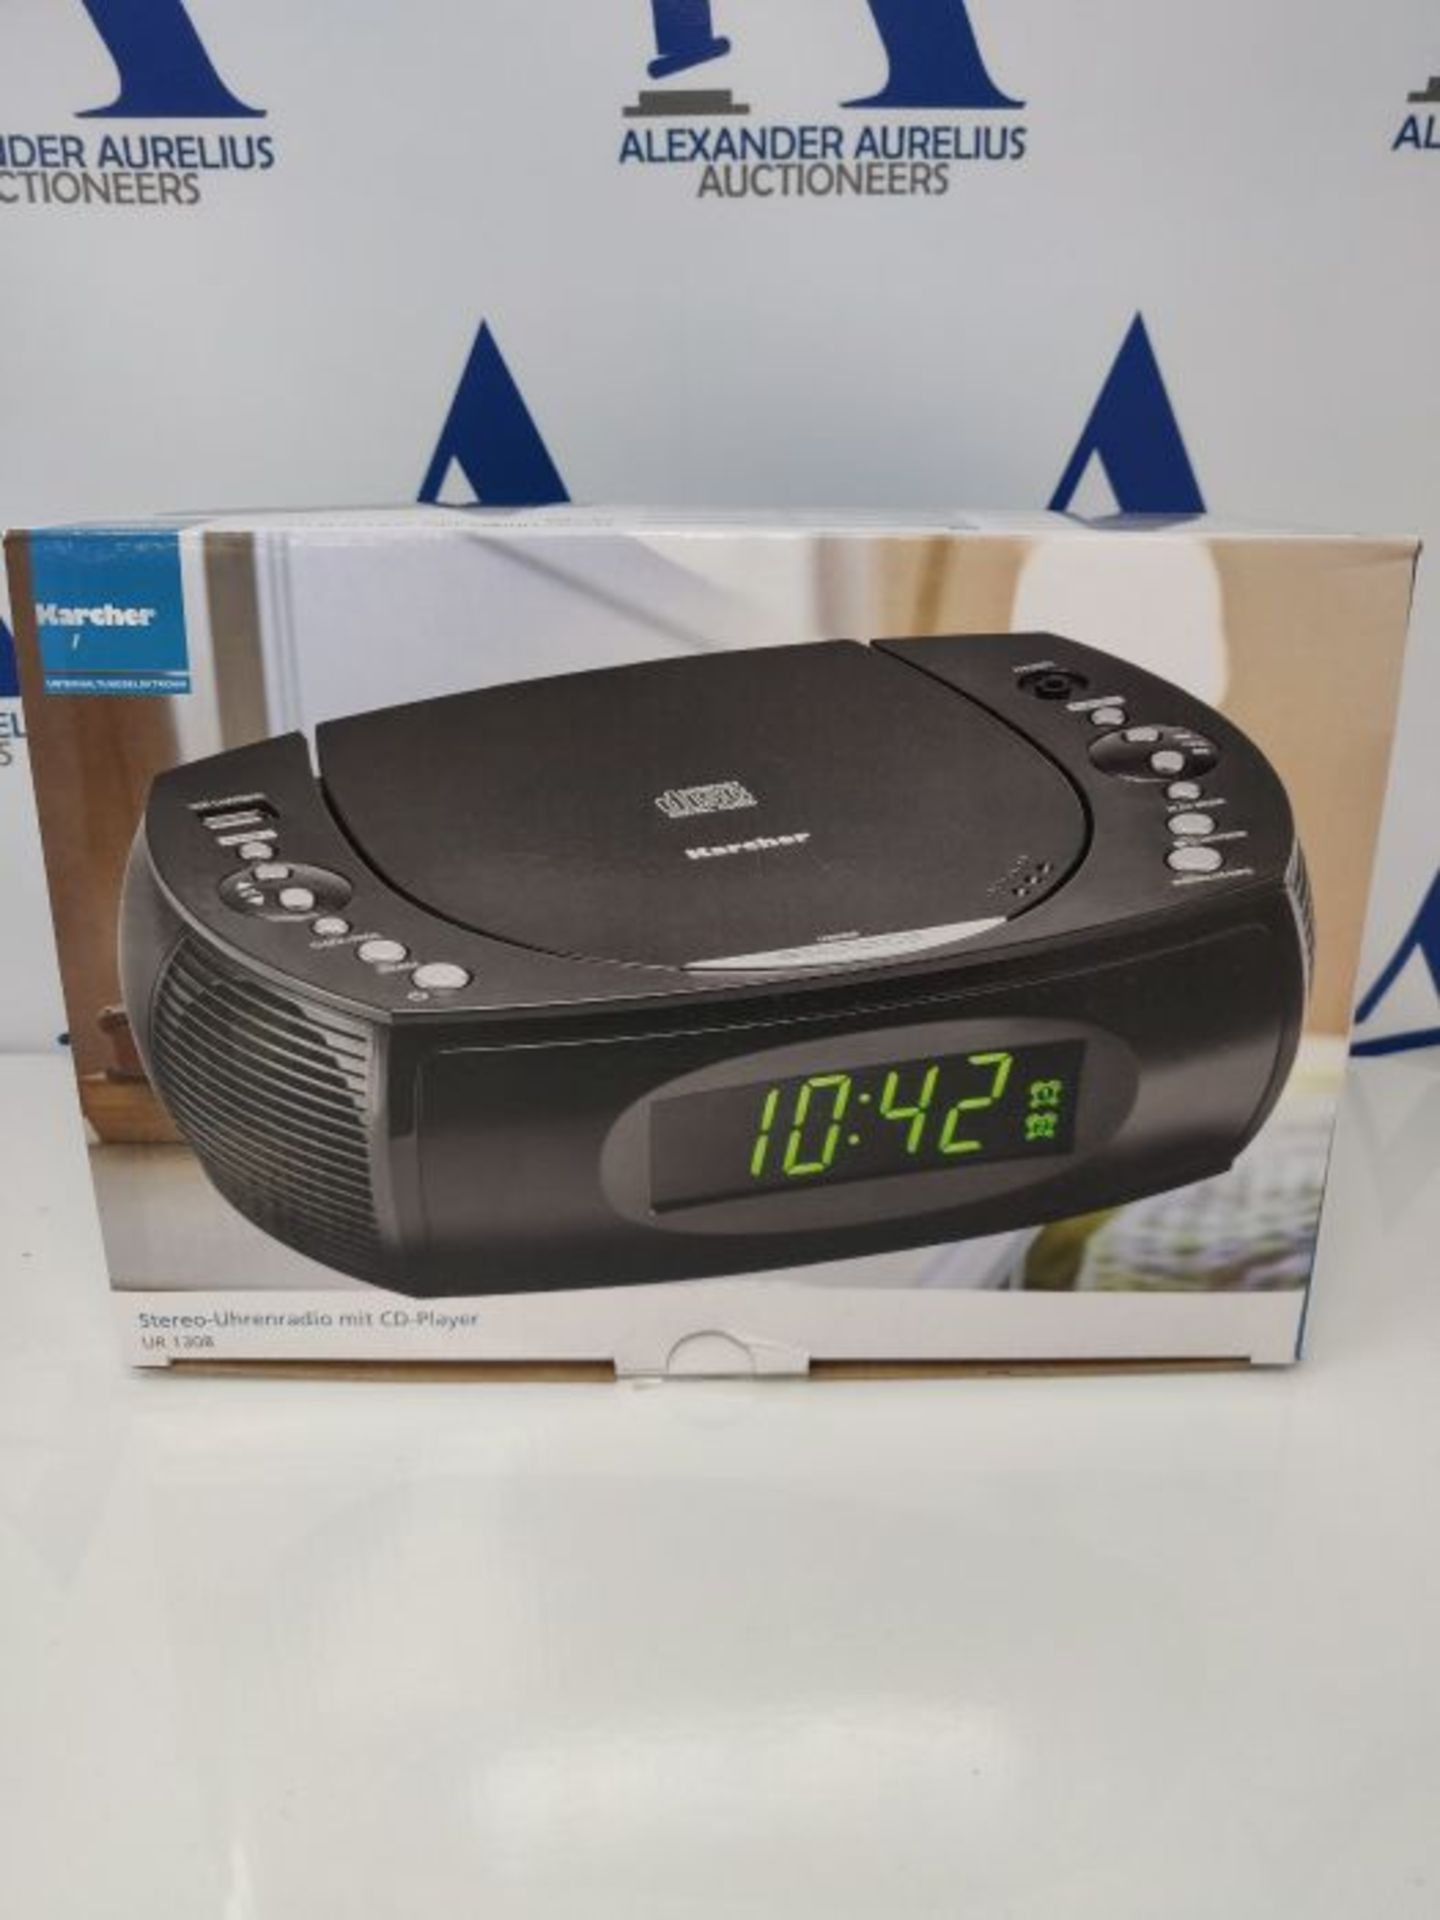 Kärcher (UR 1308) clock radio with CD player and FM radio (20 station memory) USB cha - Image 2 of 3